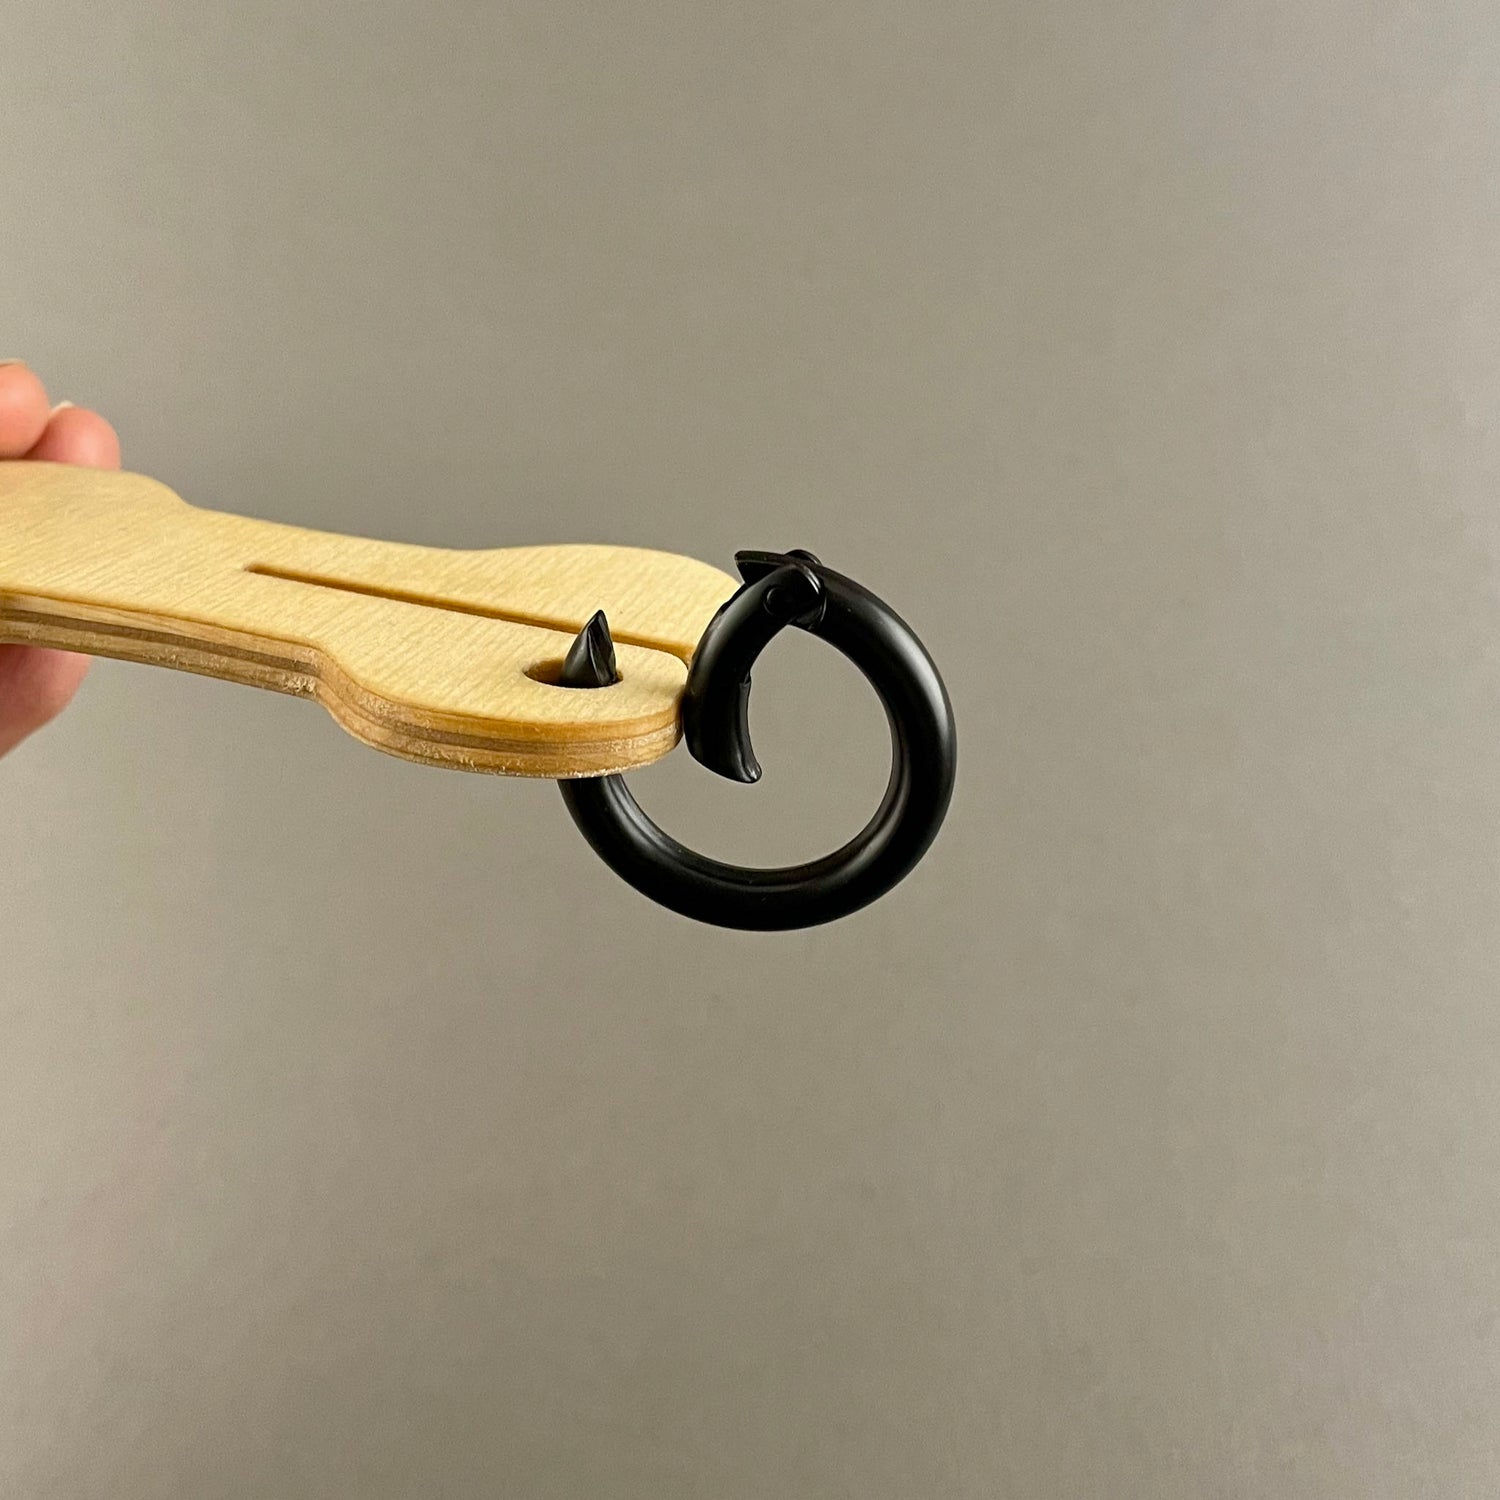 clip ring used in our poop bag holders